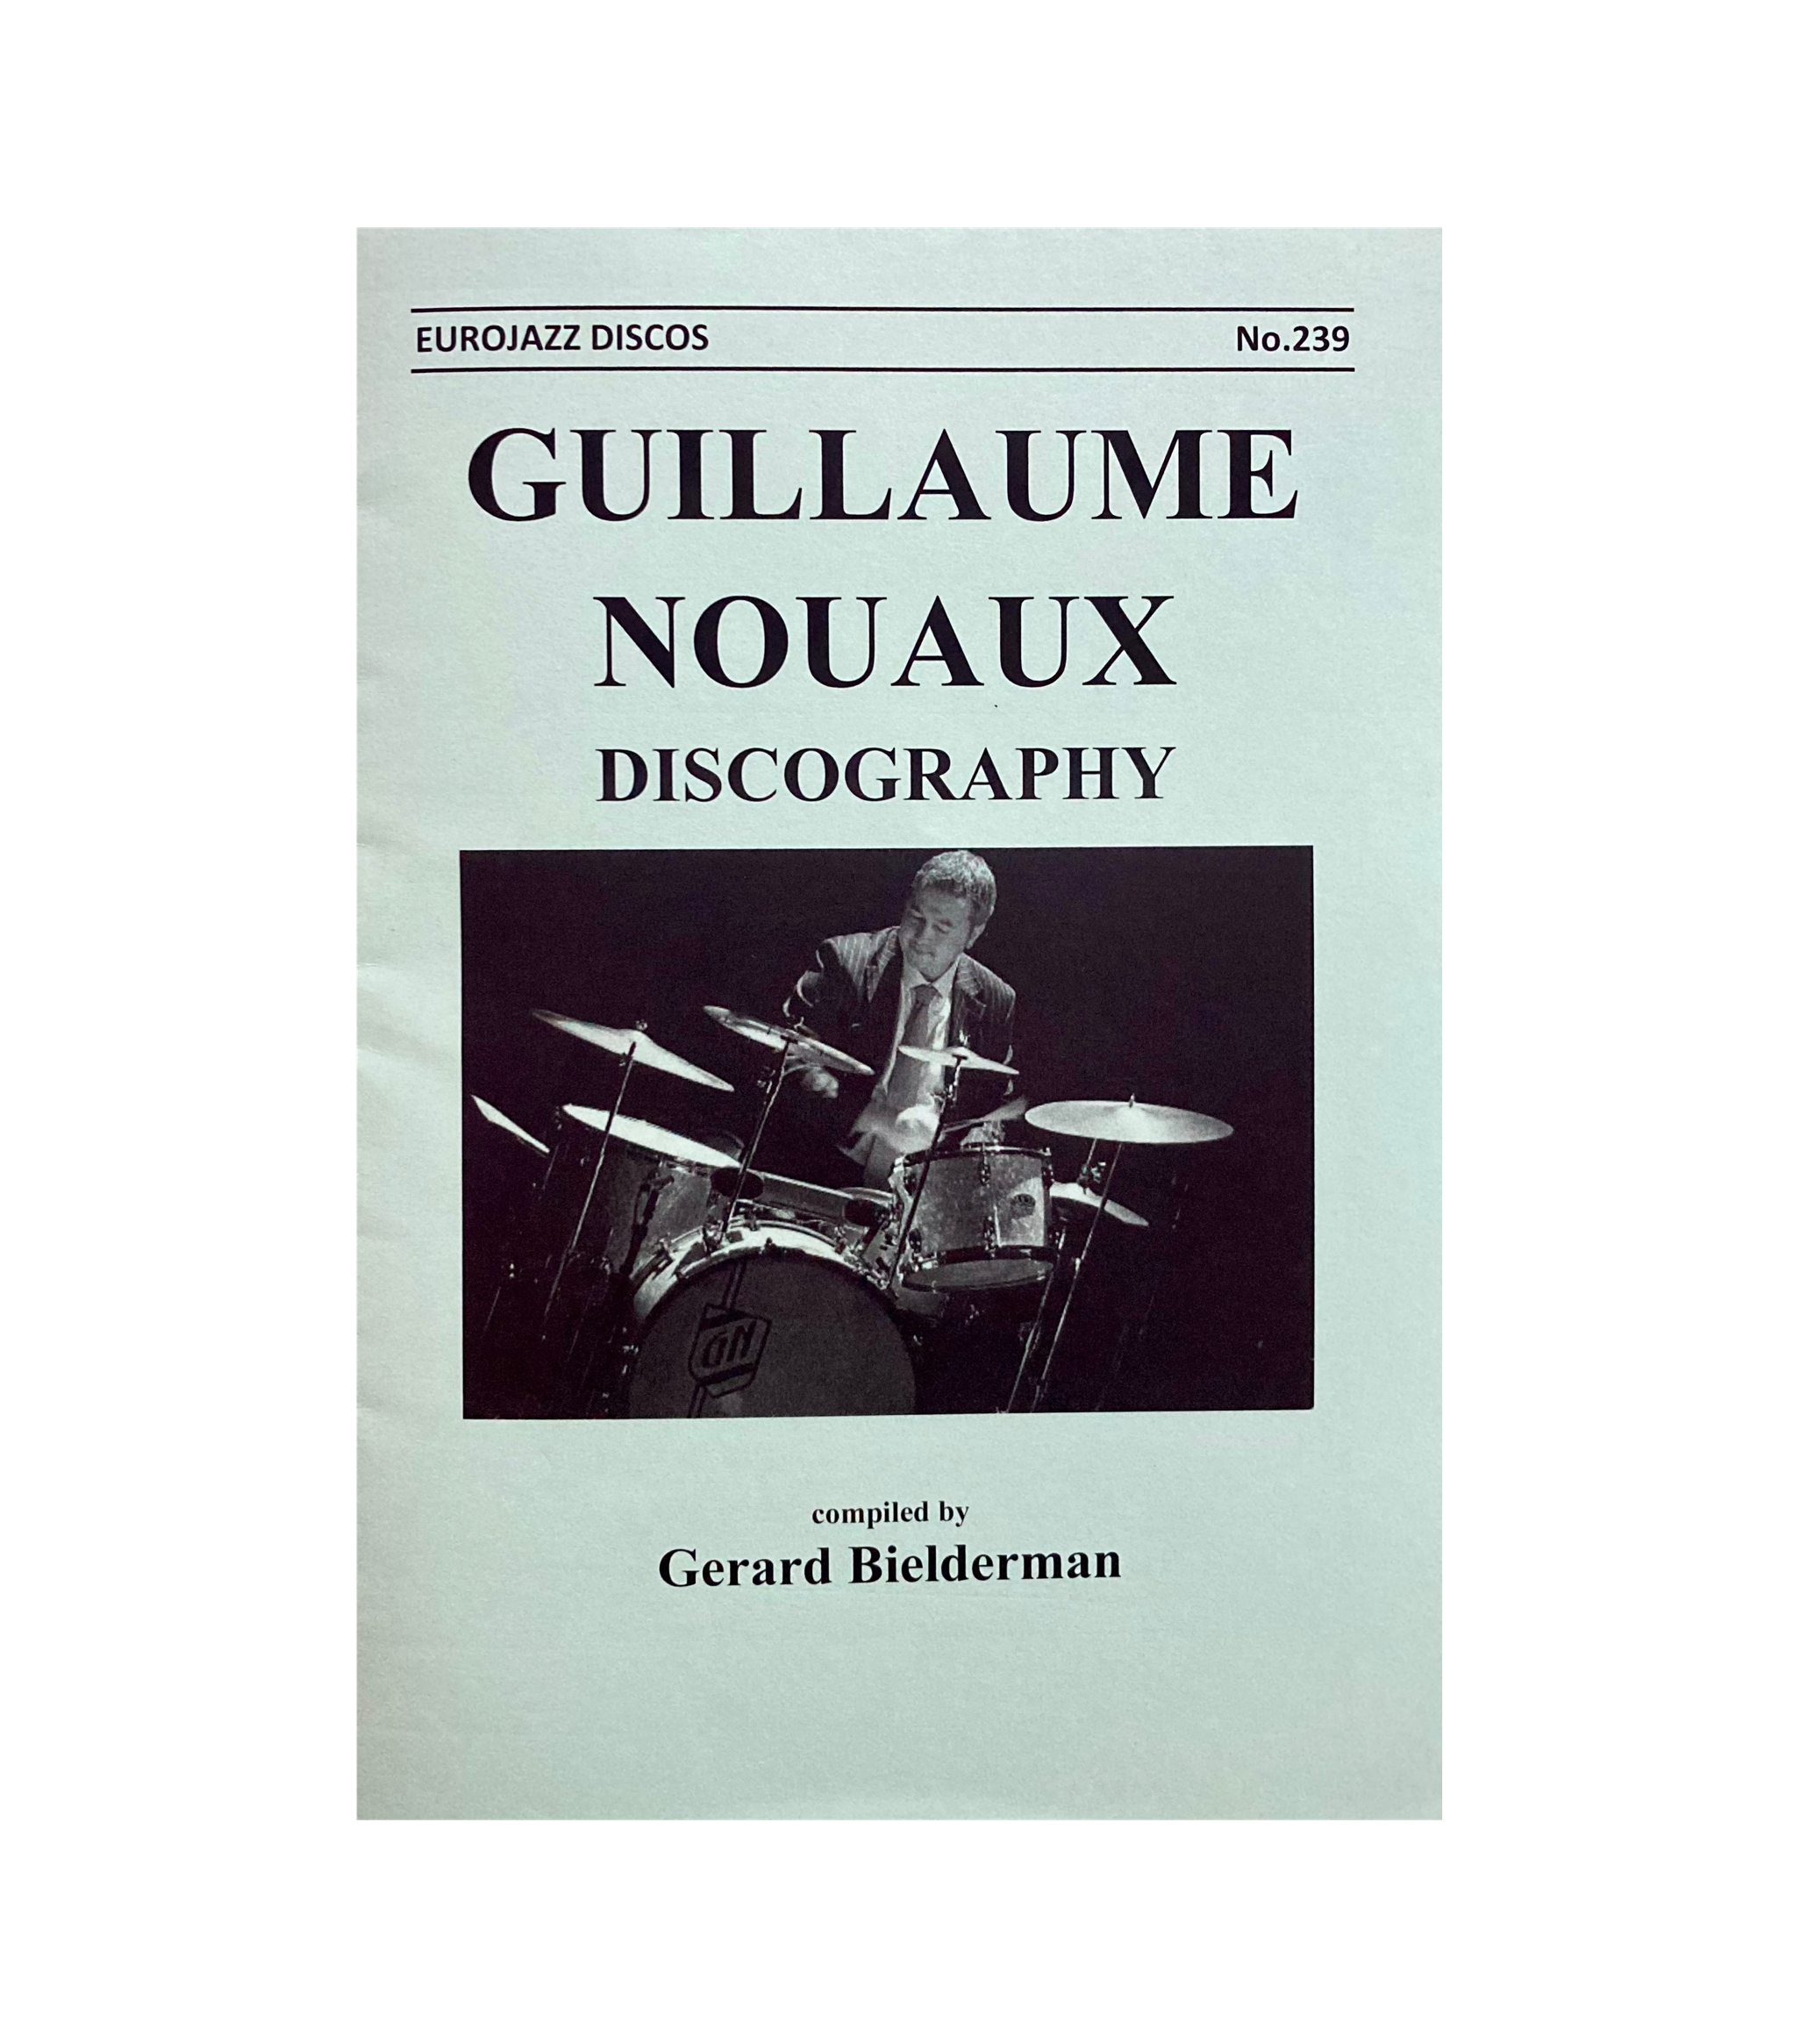 Guillaume Nouaux (Discography Eurojazz Discos n°239)